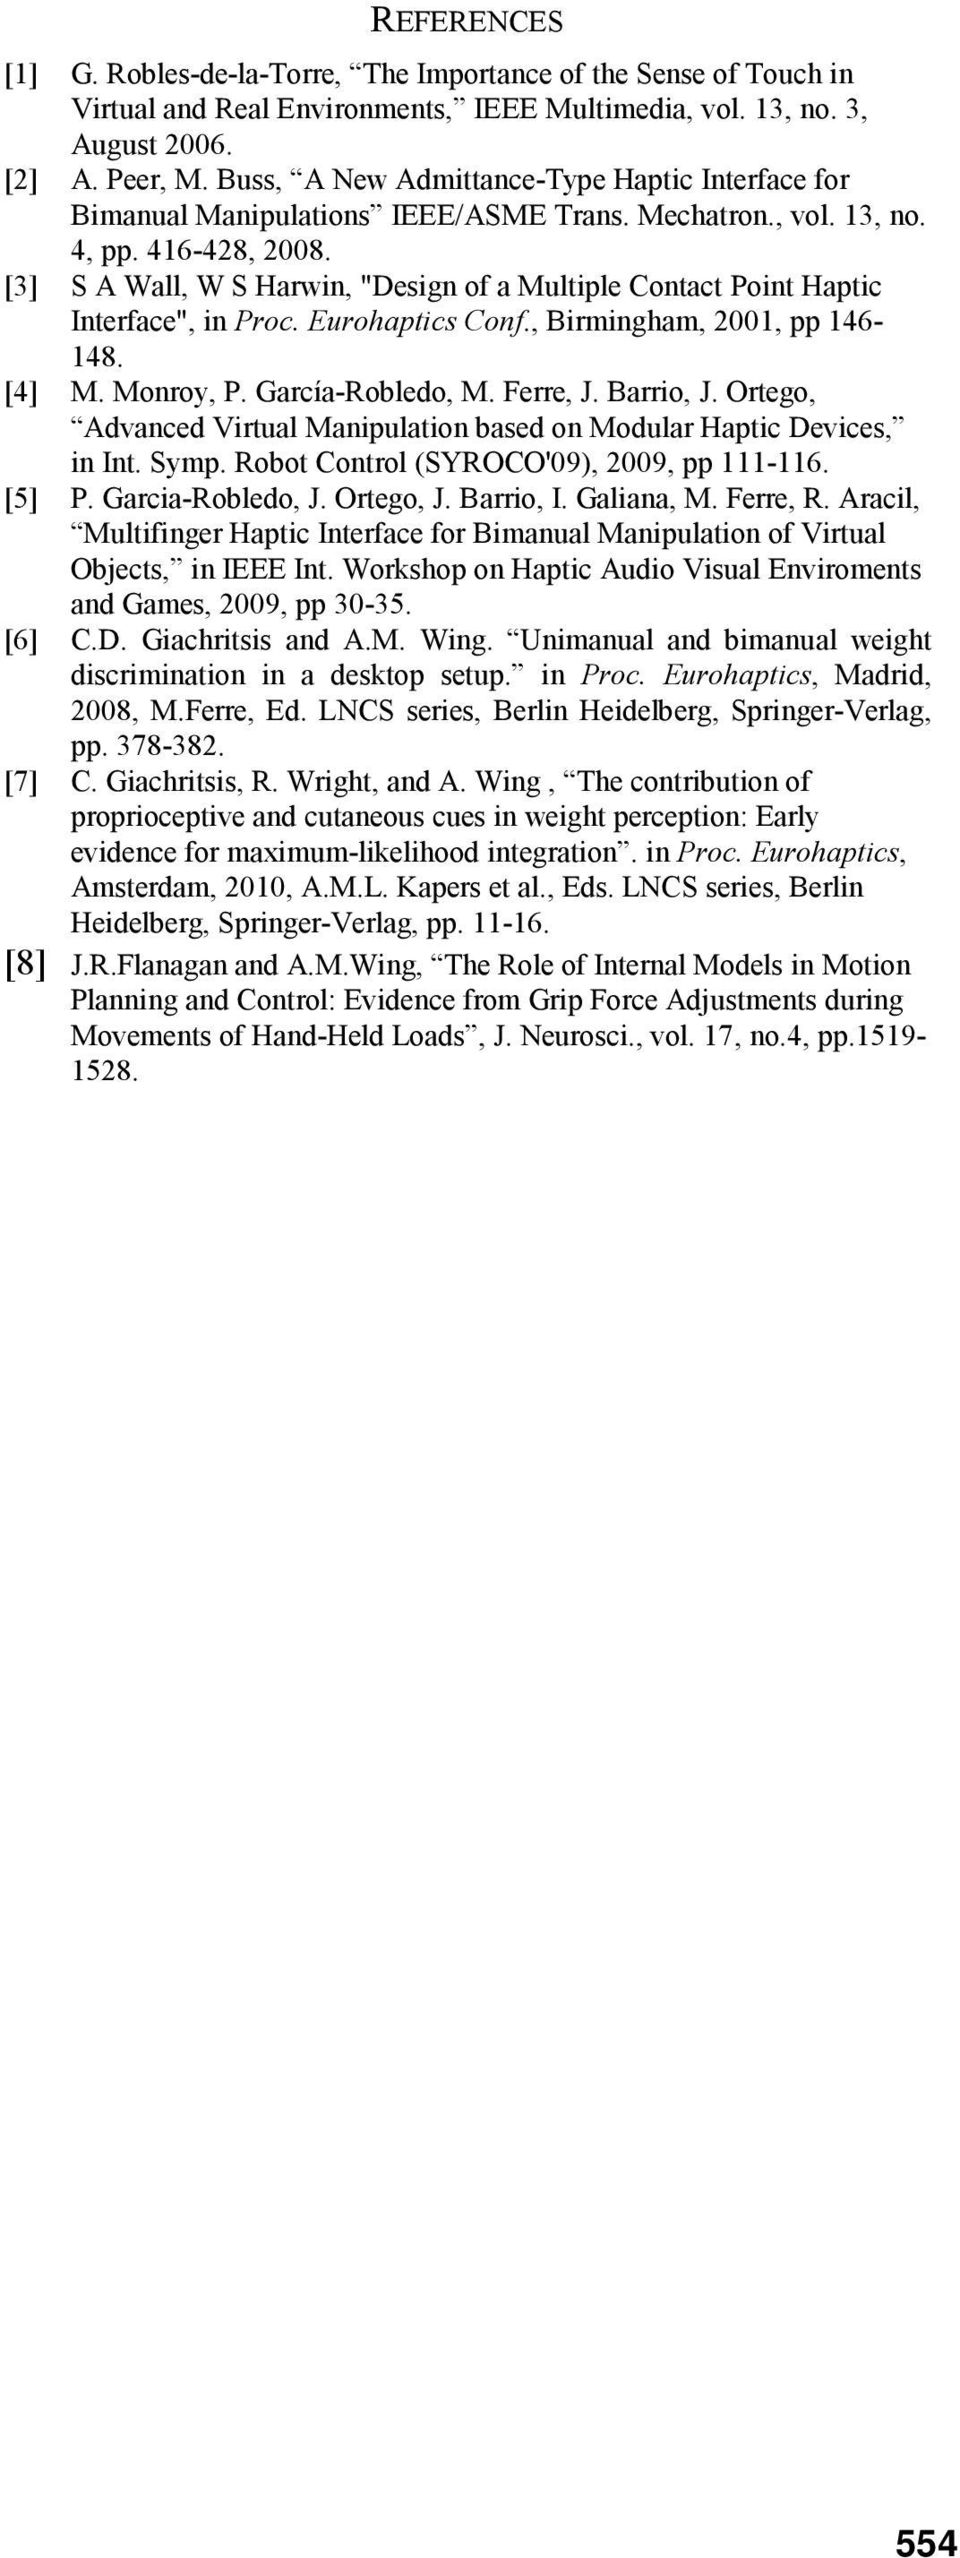 [3] S A Wall, W S Harwin, "Design of a Multiple Contact Point Haptic Interface", in Proc. Eurohaptics Conf., Birmingham, 2001, pp 146-148. [4] M. Monroy, P. García-Robledo, M. Ferre, J. Barrio, J.